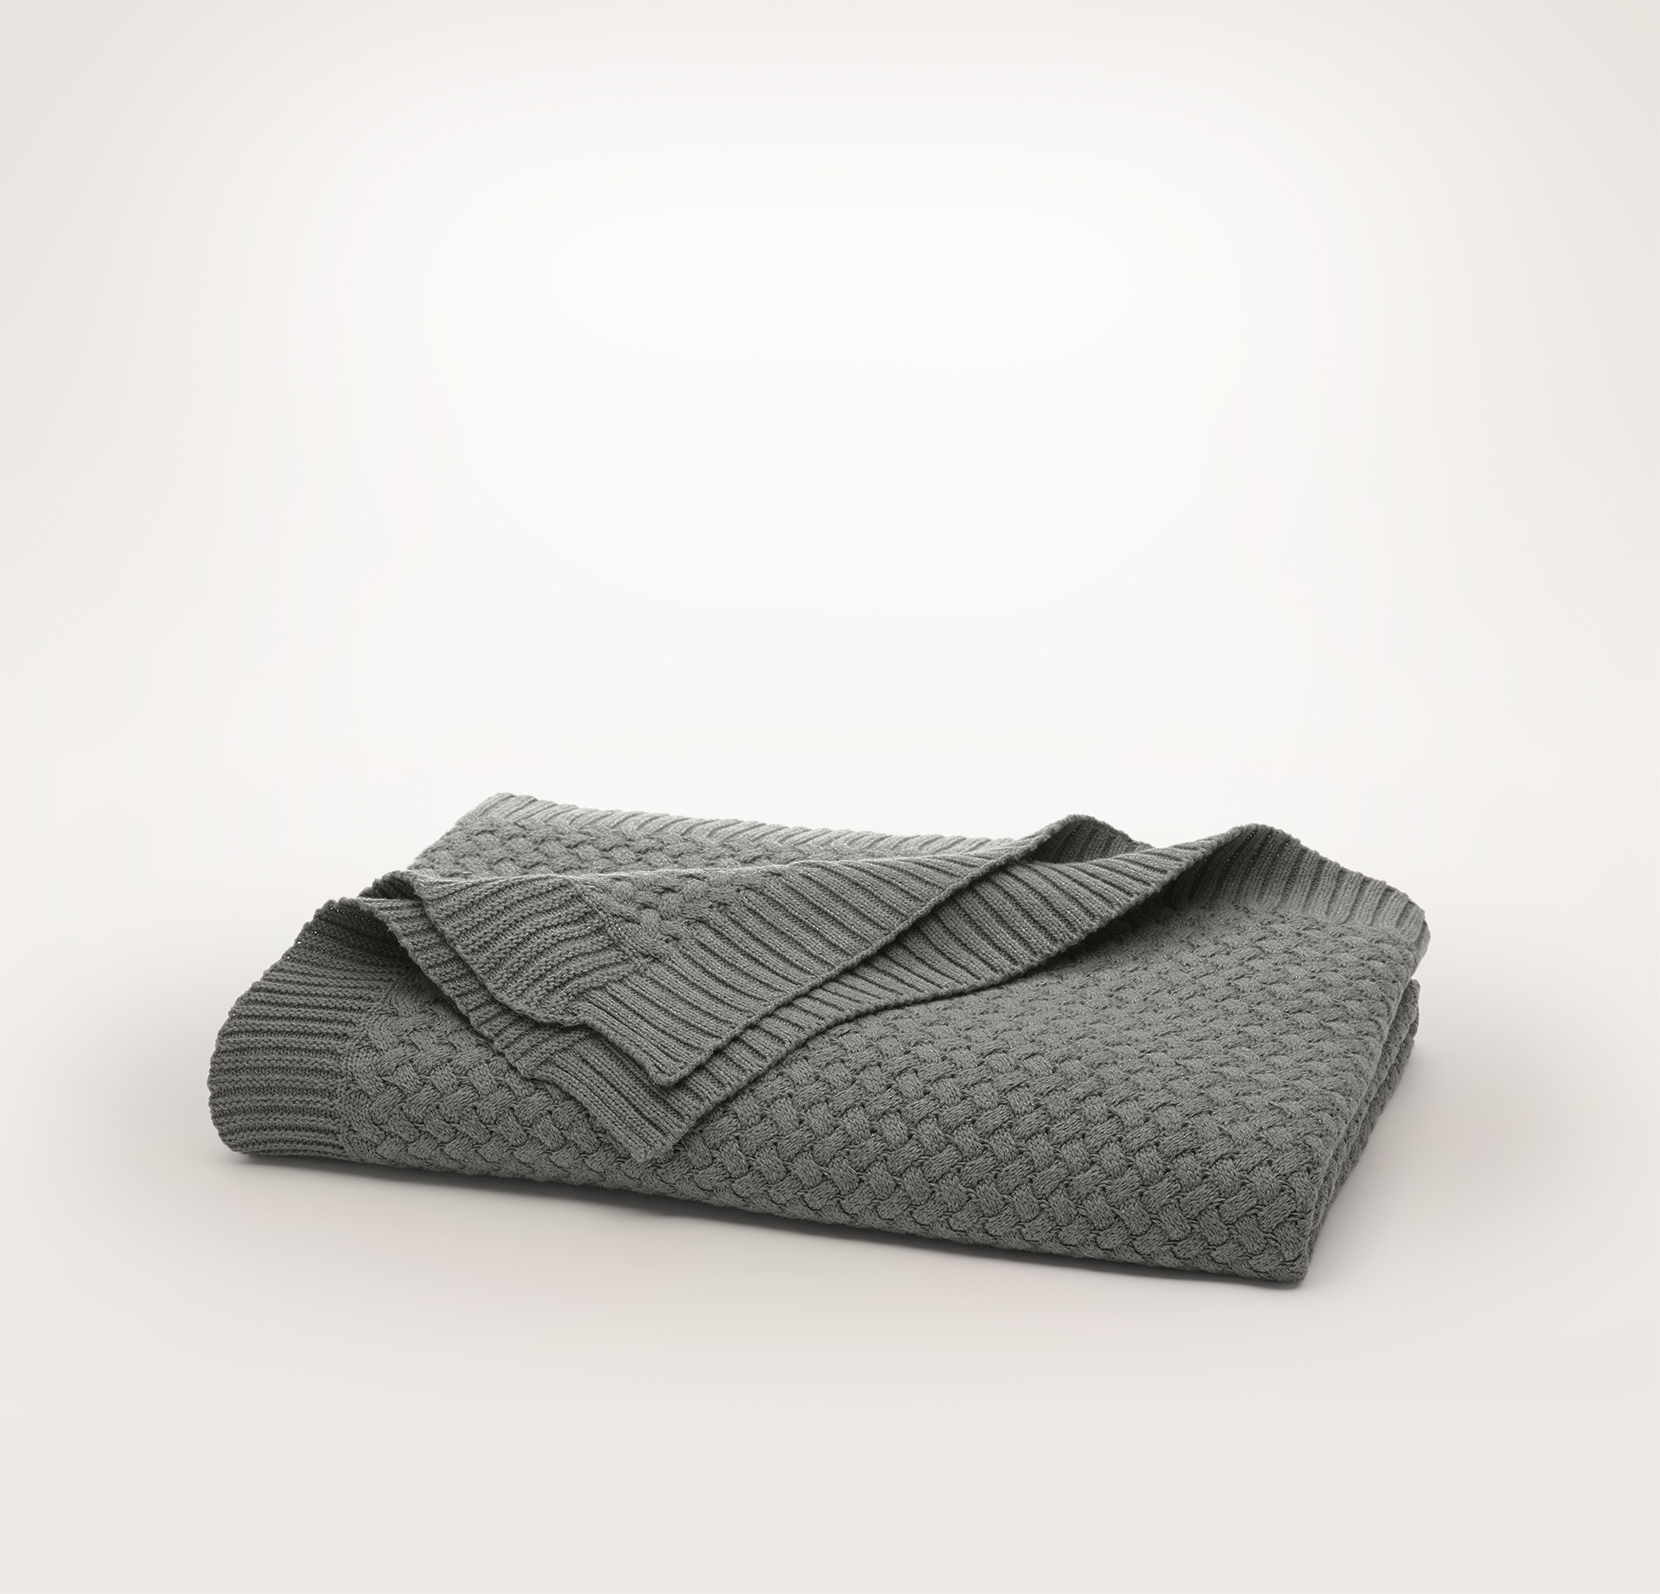 undefined Sweater Knit Throw Blanket - Slide 1